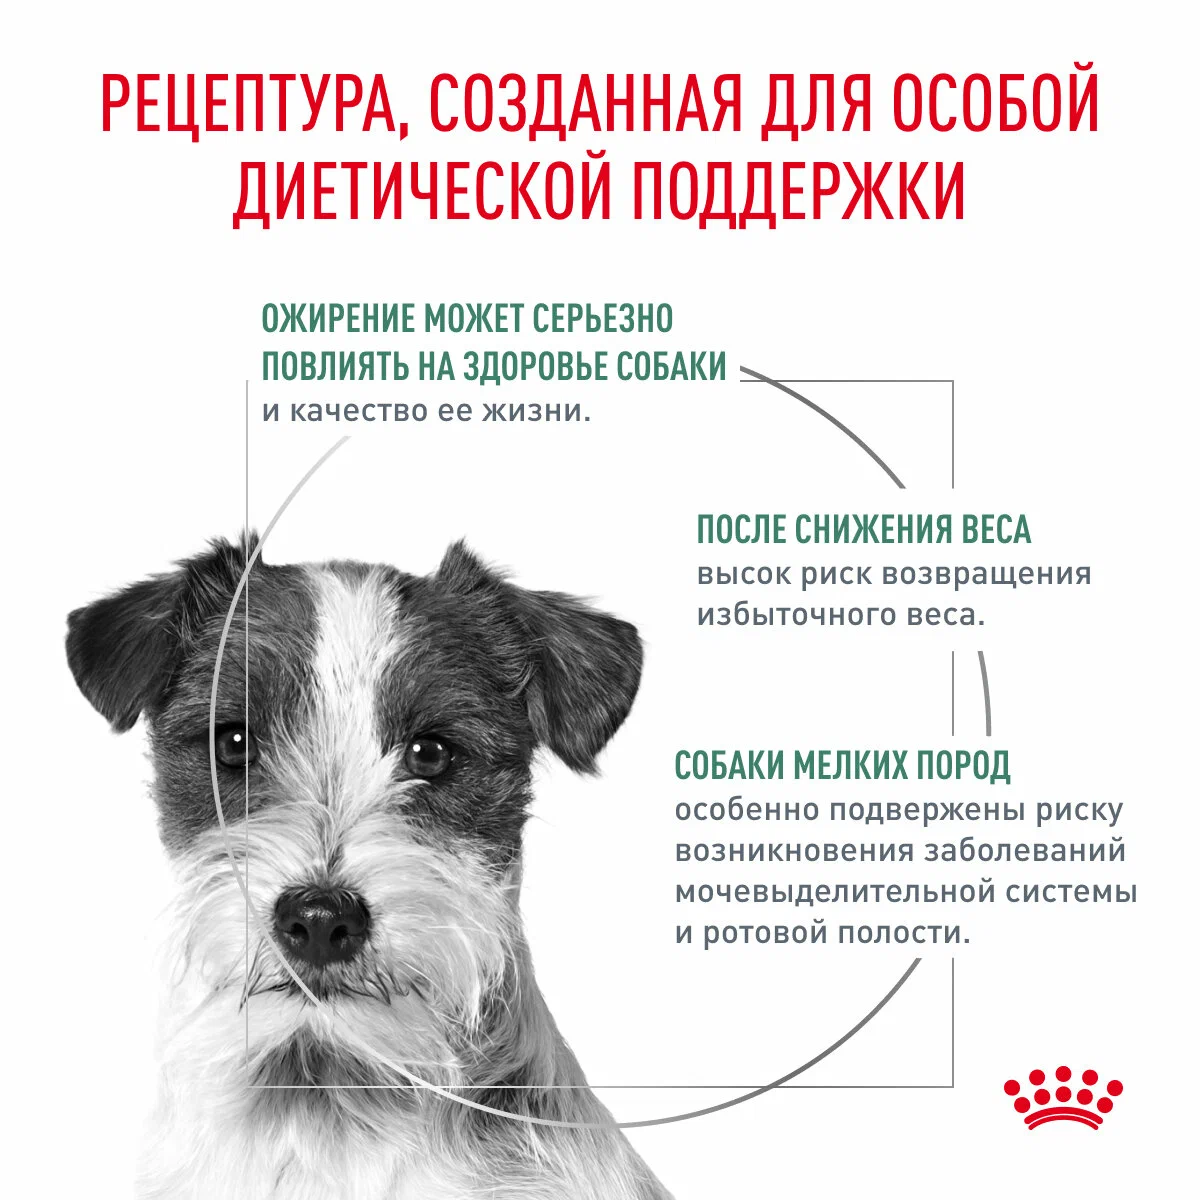 Сухой корм для собак мелких пород Royal Canin Satiety Weight Management Small Dogs 500 г